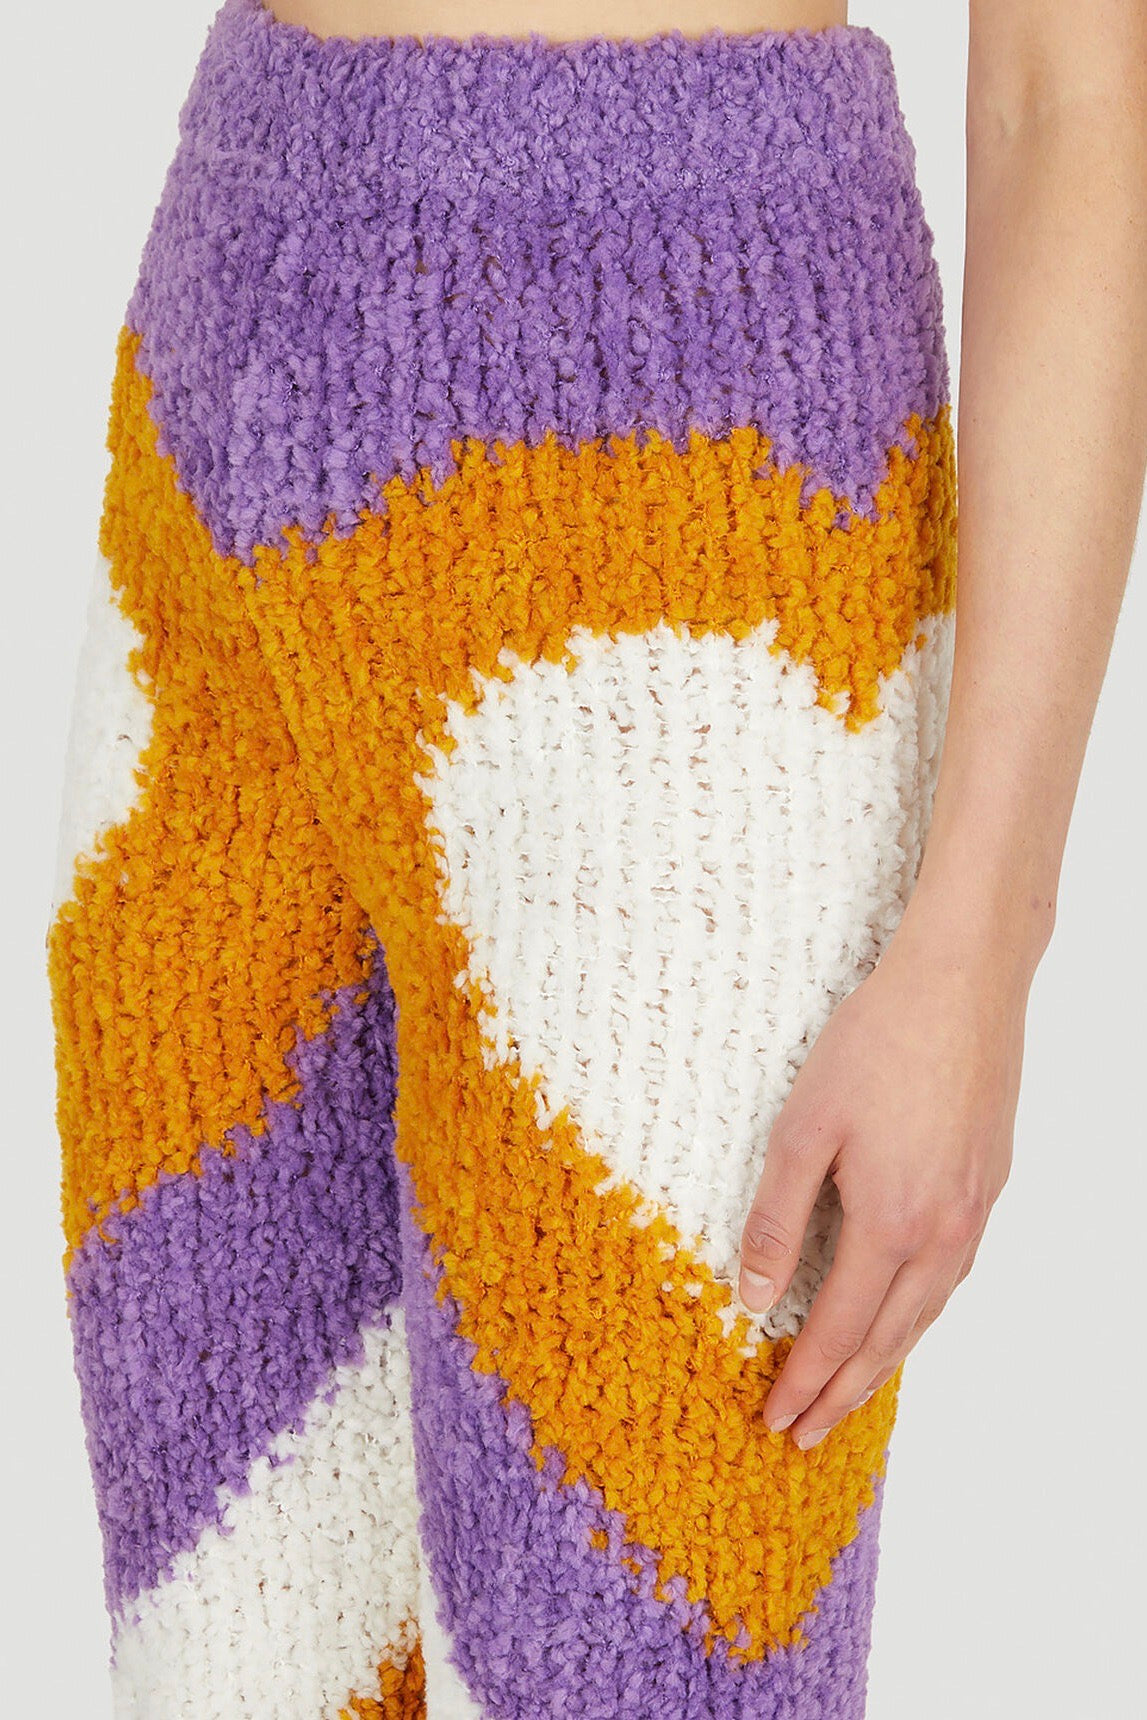 Marco Rambaldi - Heart Pile Knitted Trousers: Purple & Mustard